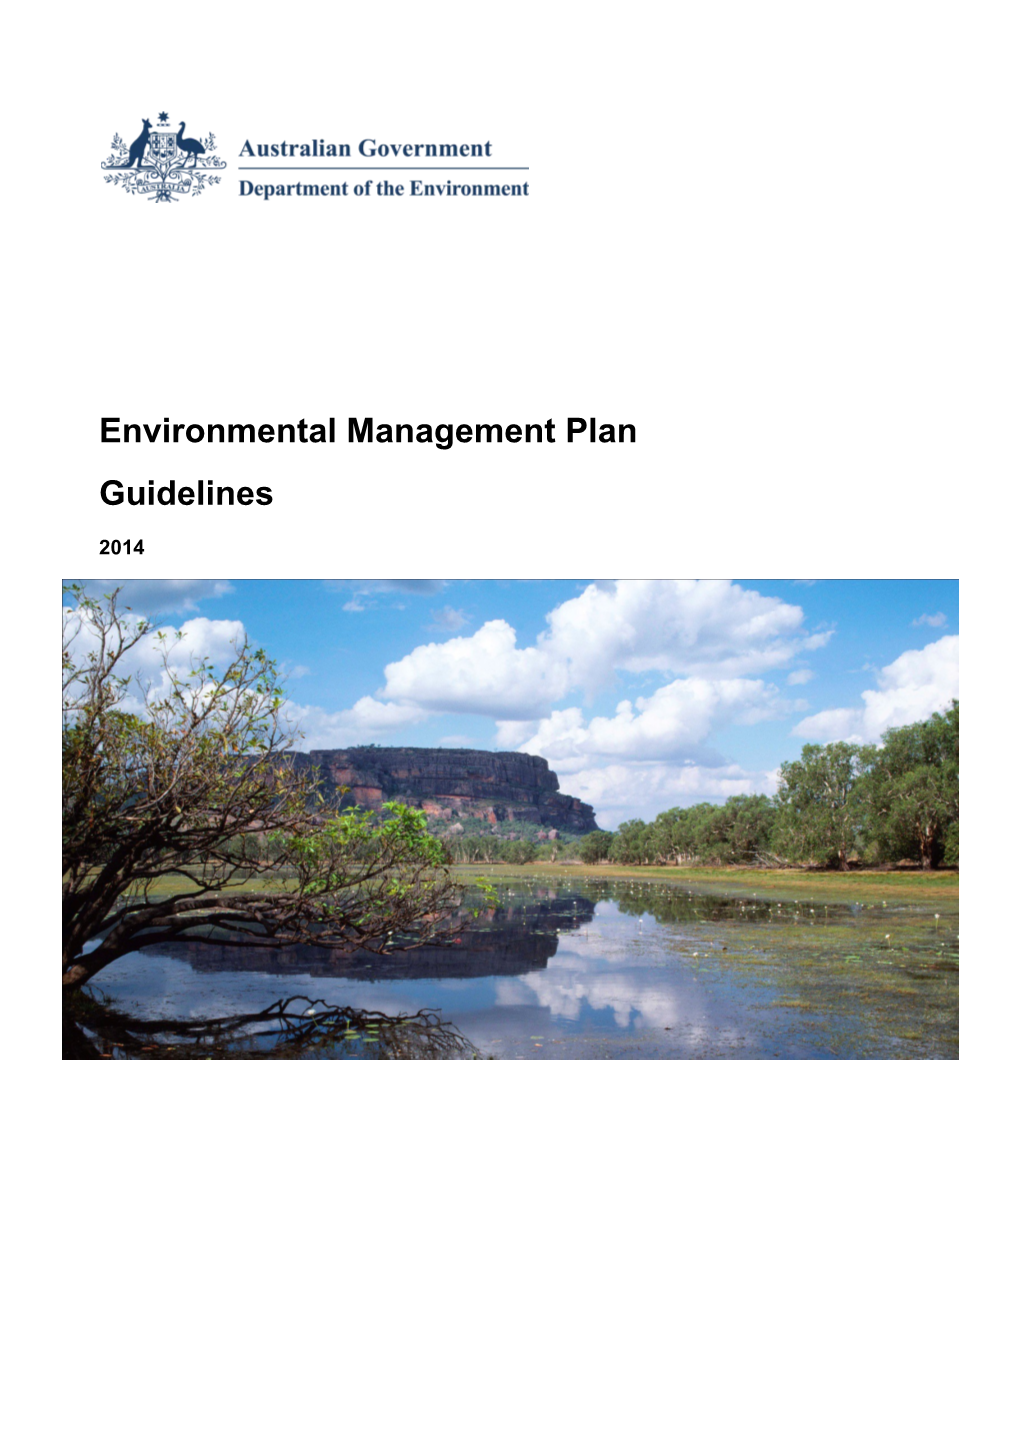 Environmental Management Plan Guidelines